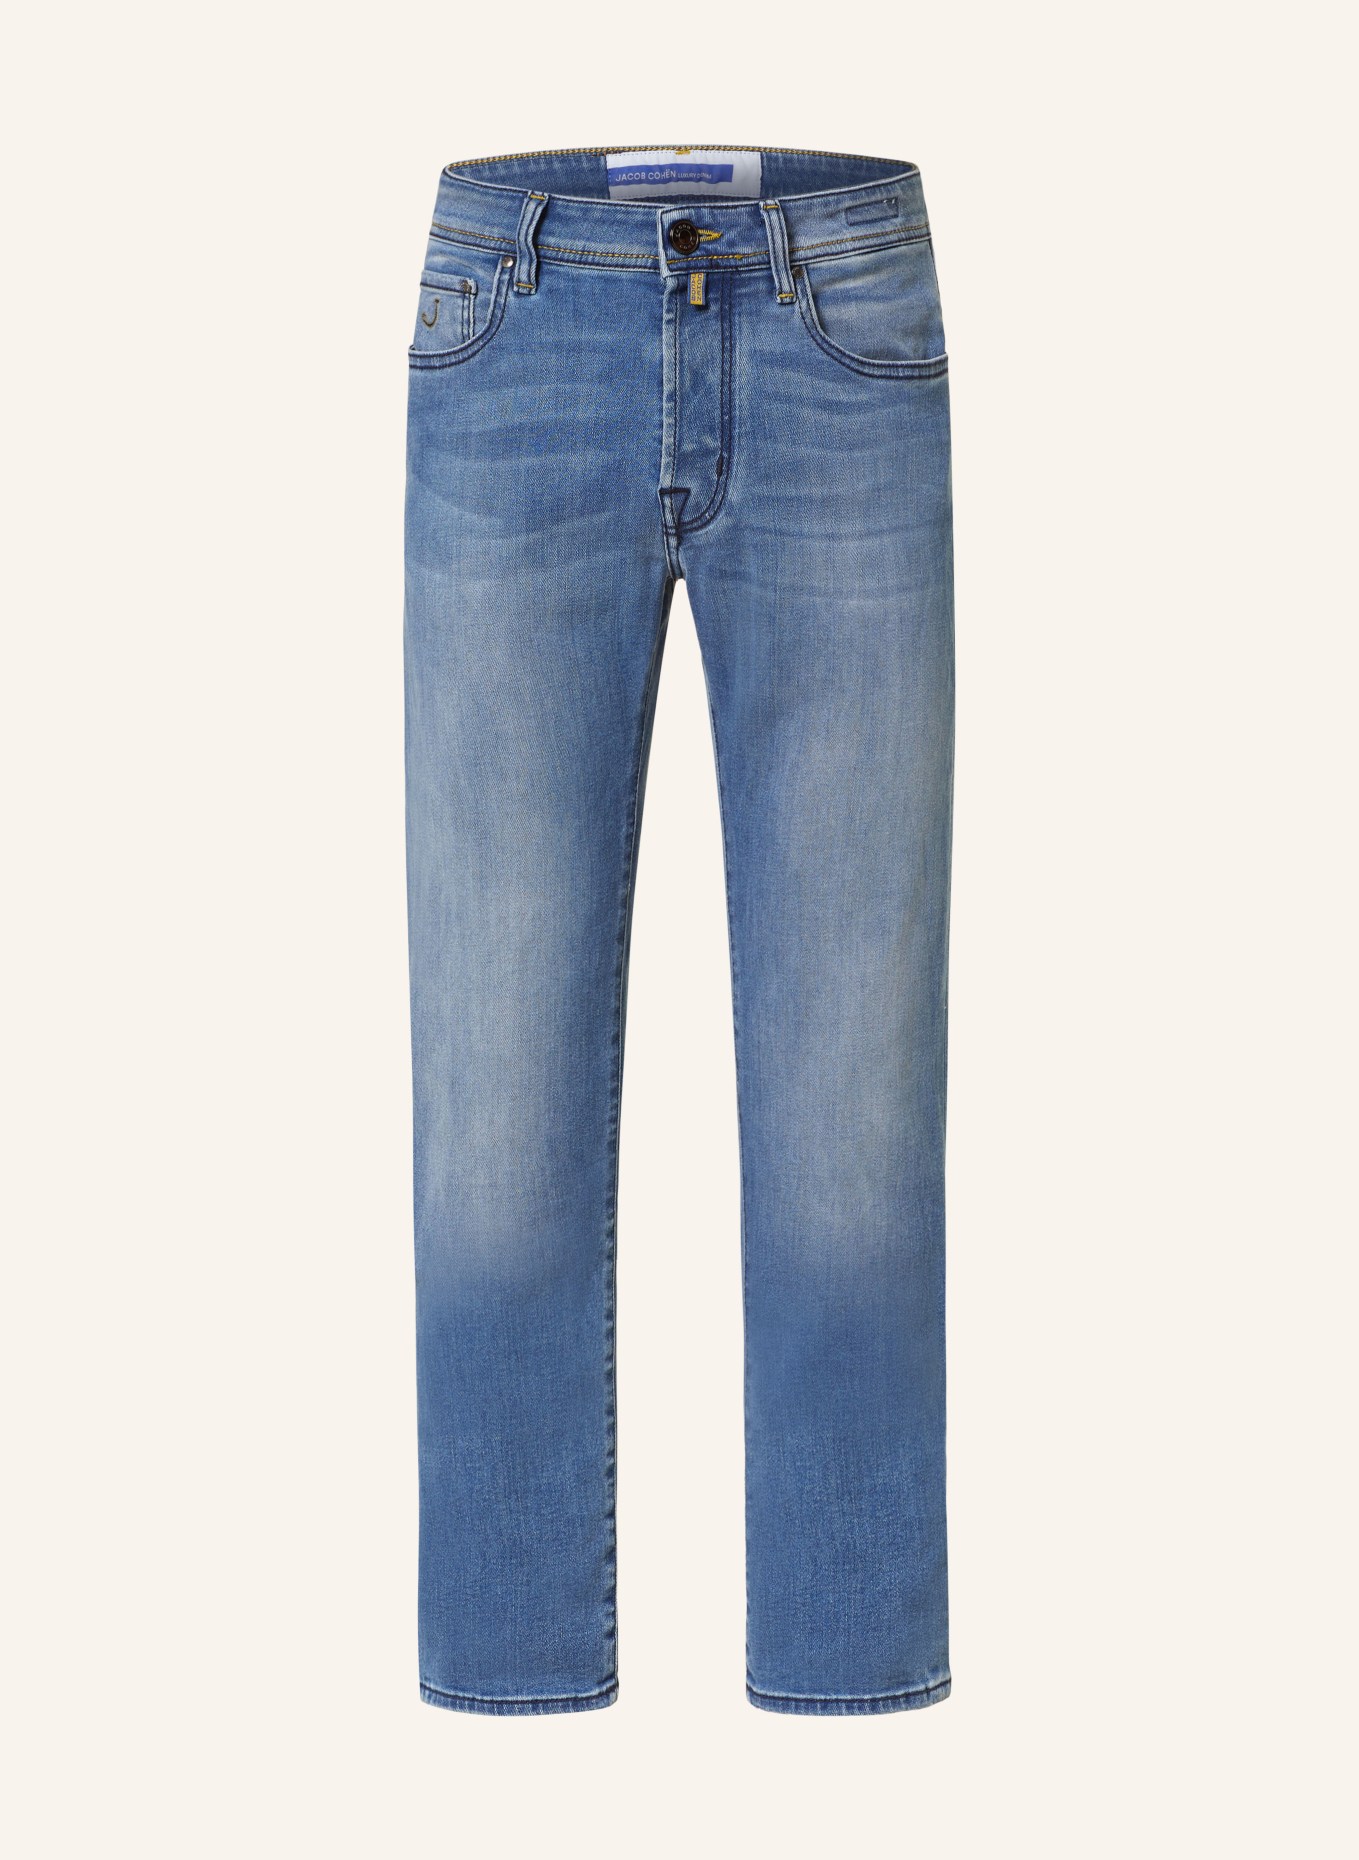 JACOB COHEN Jeans BARD Slim Fit, Farbe: 698D Light Blue (Bild 1)